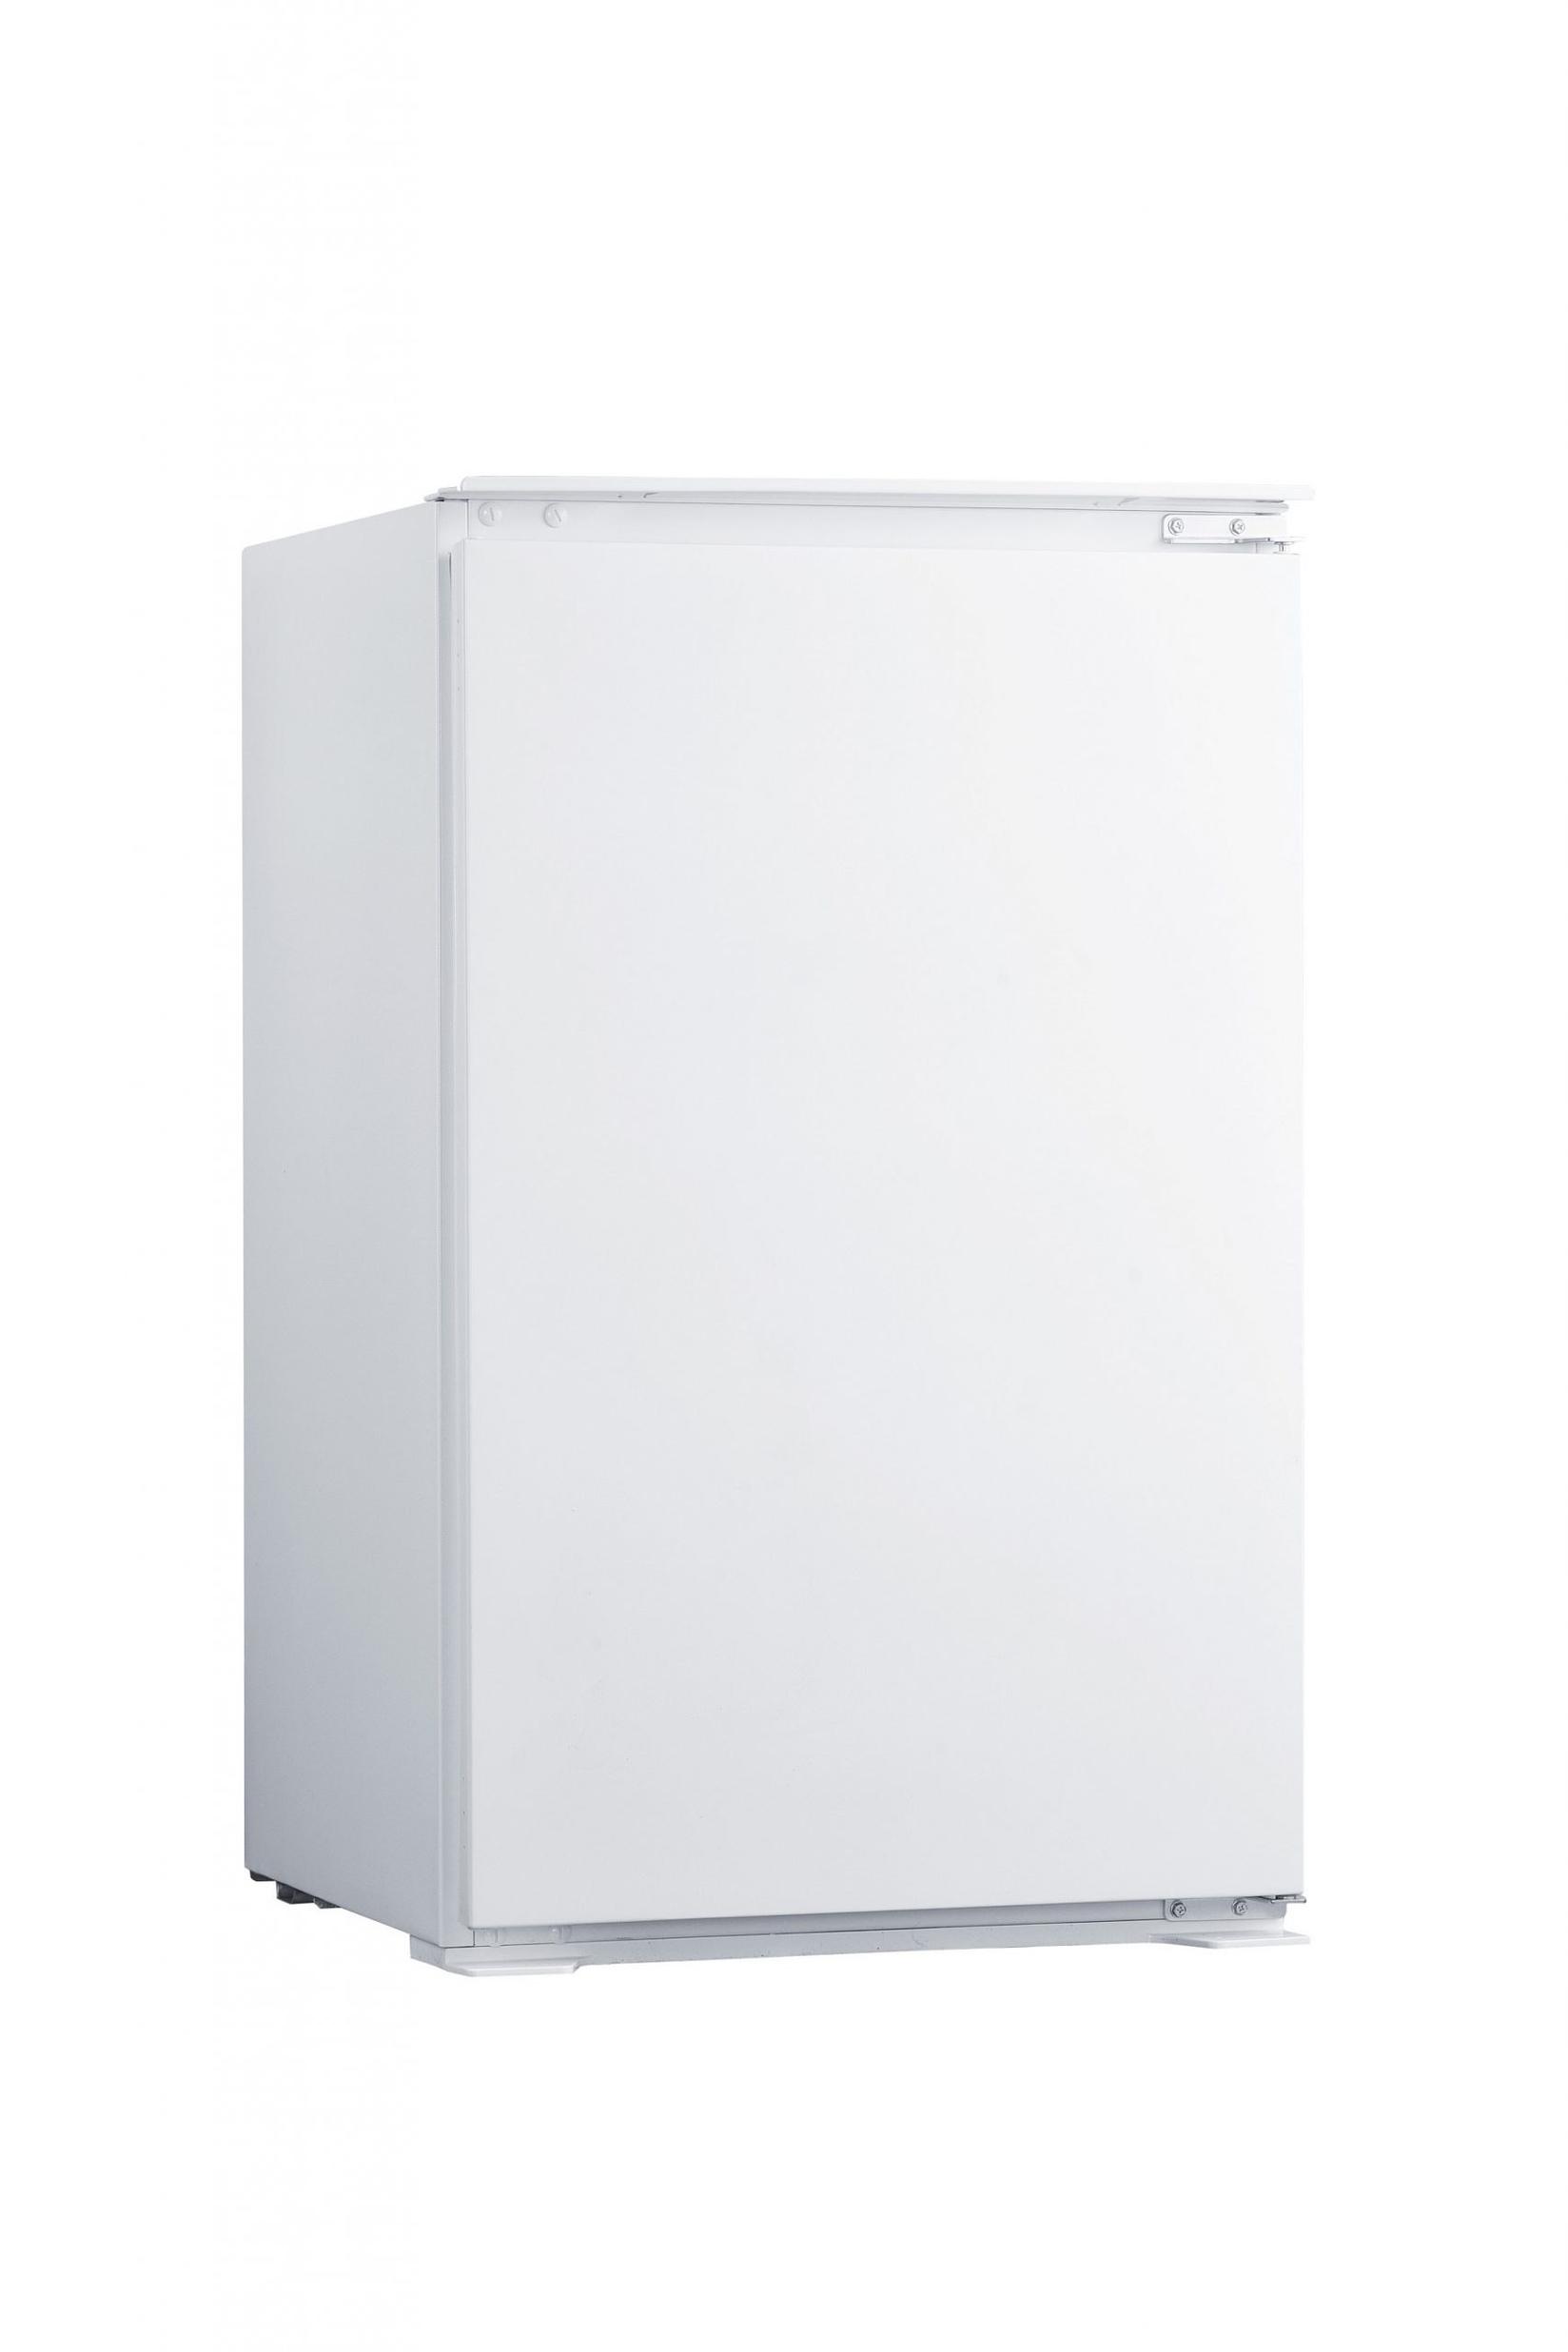 Selected image for TESLA RI1201H1 Ugradni frižider sa jednim vratima, 118L, Smart Frost beli